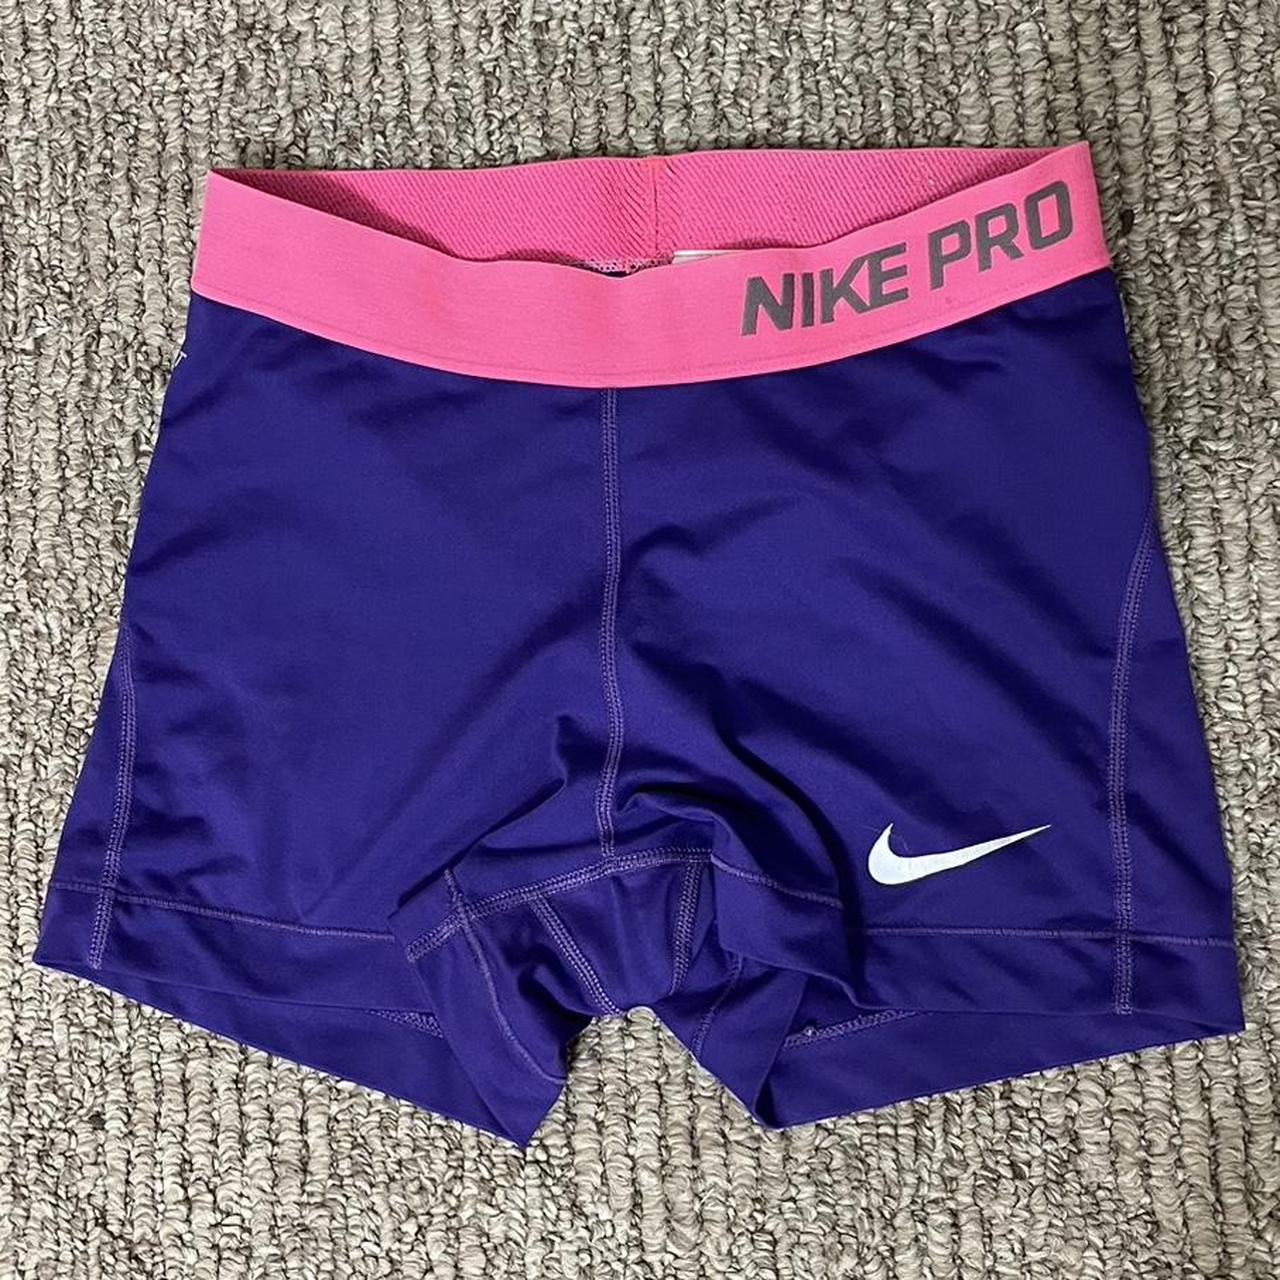 colorful nike pro shorts women